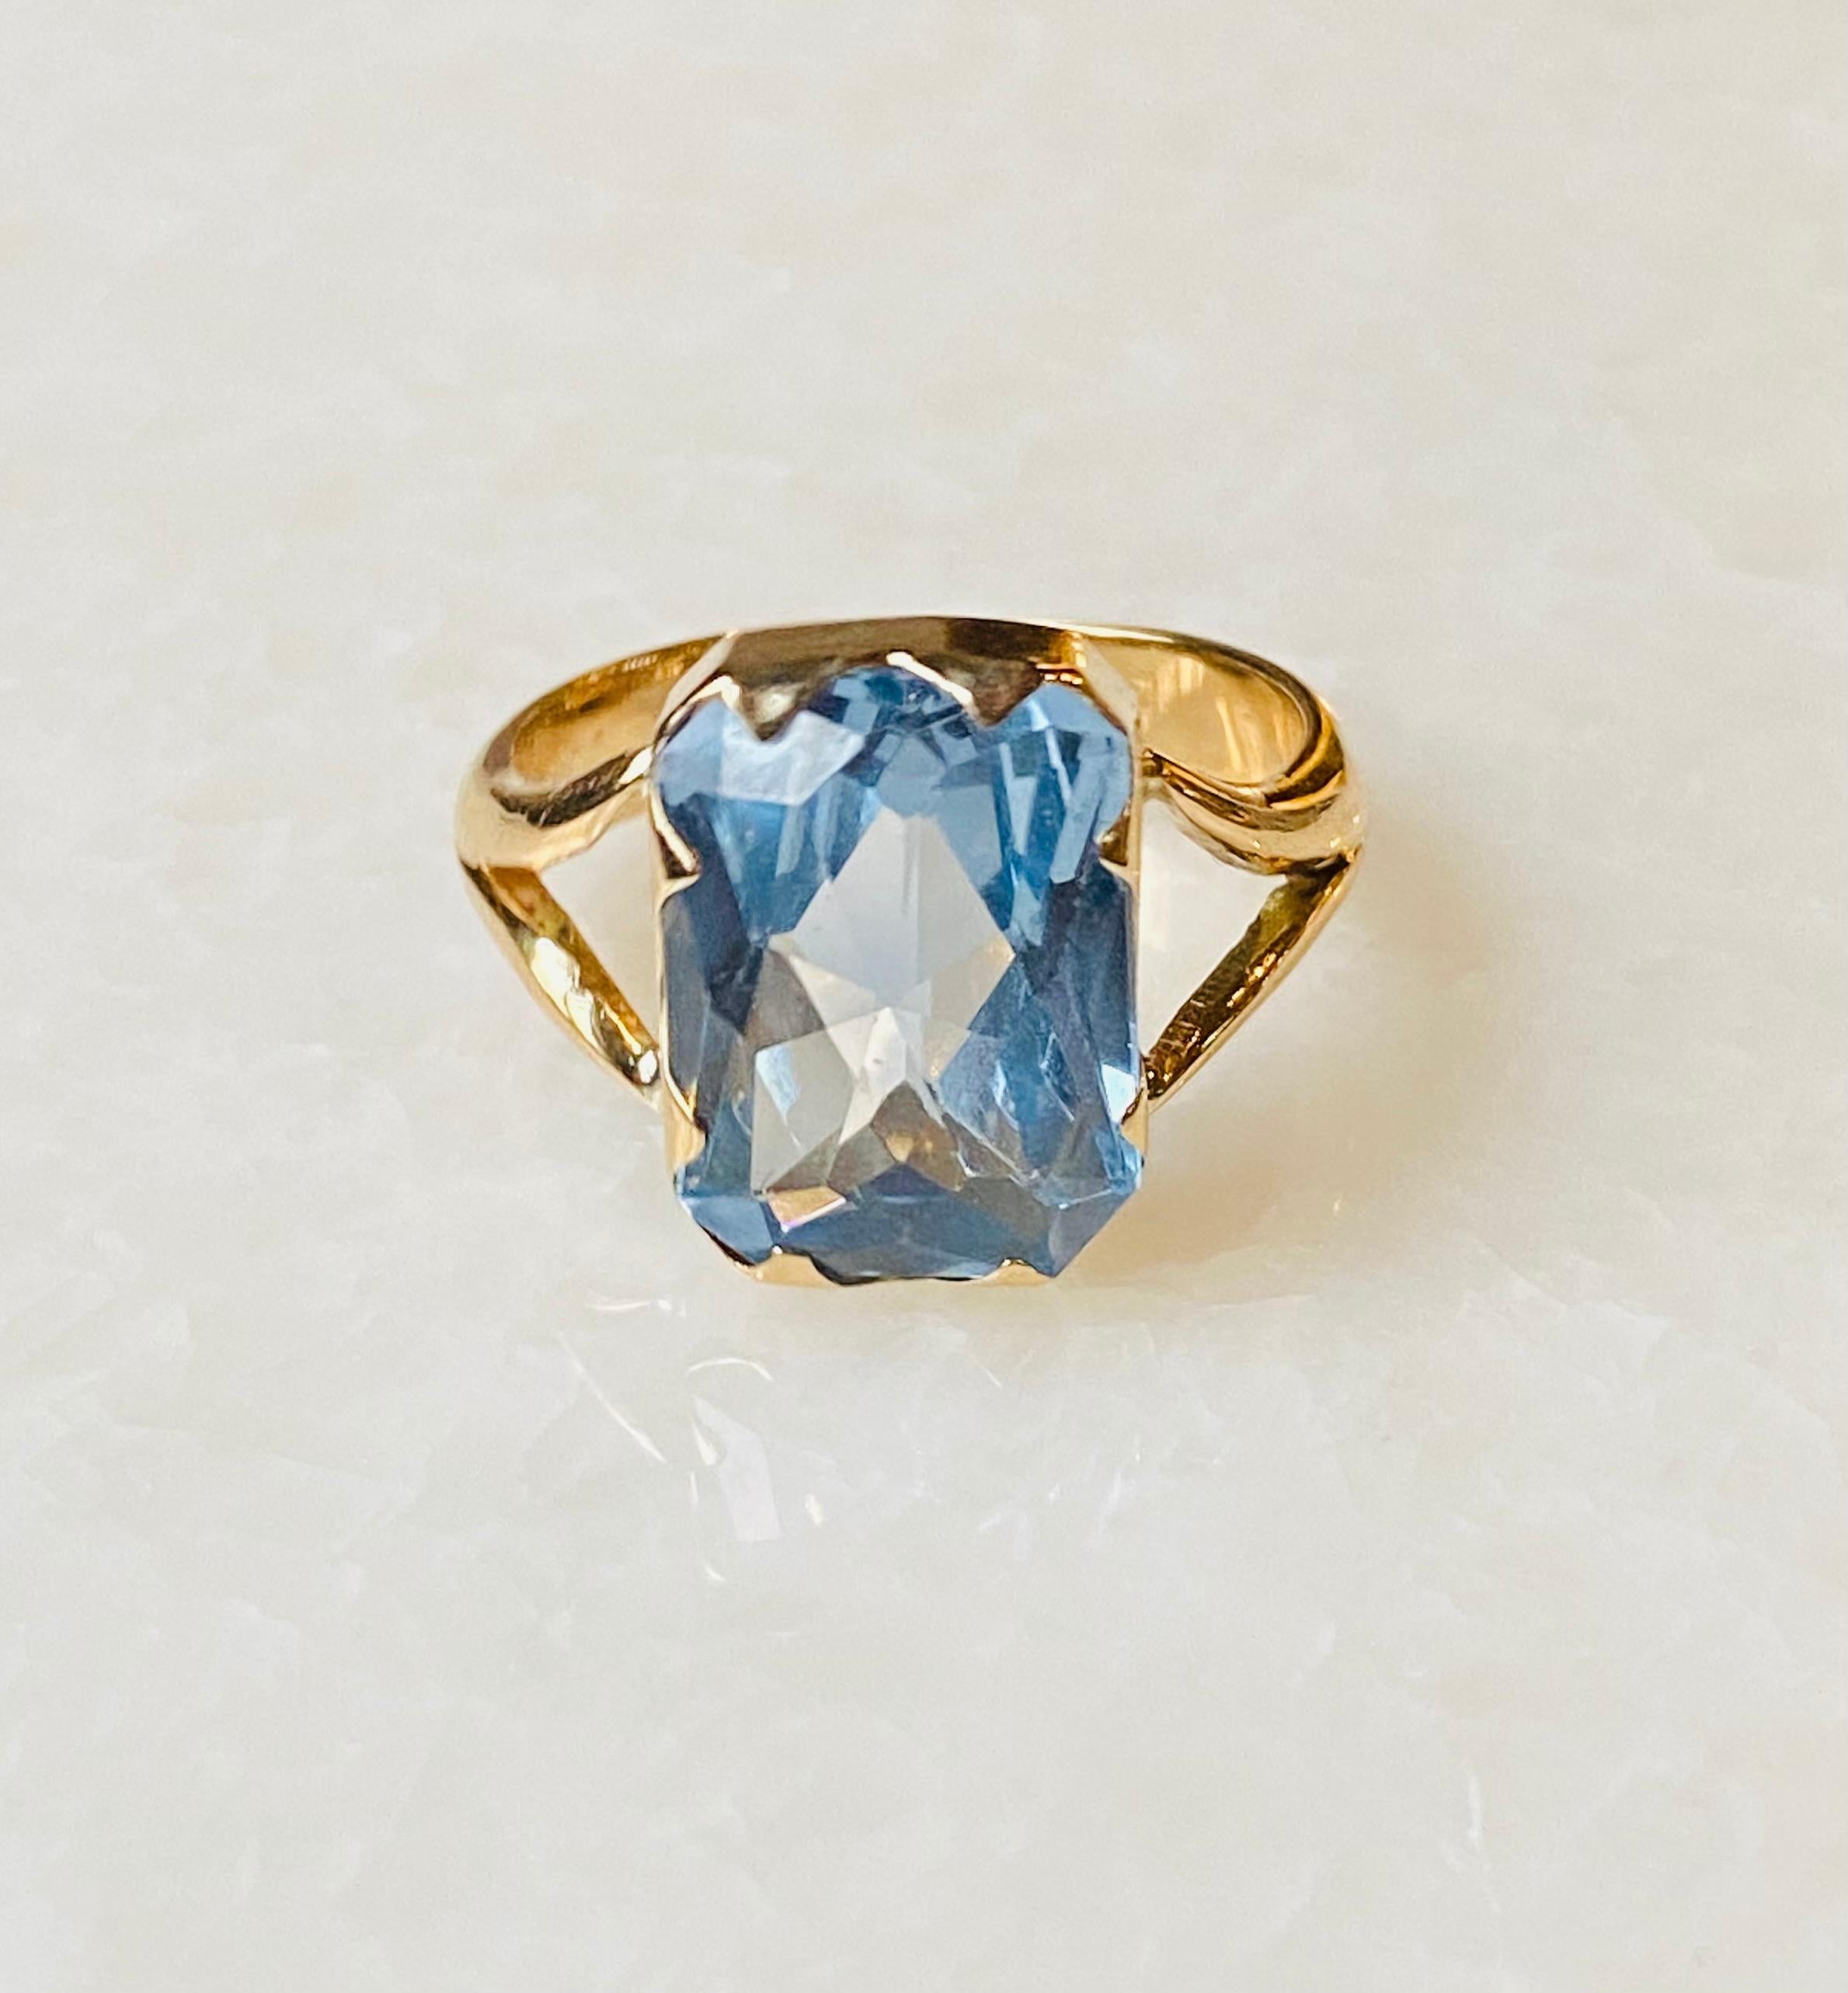 Antique 18 carat yellow golden ring, 8 sides faceted aquamarine of 7.6 carat 1